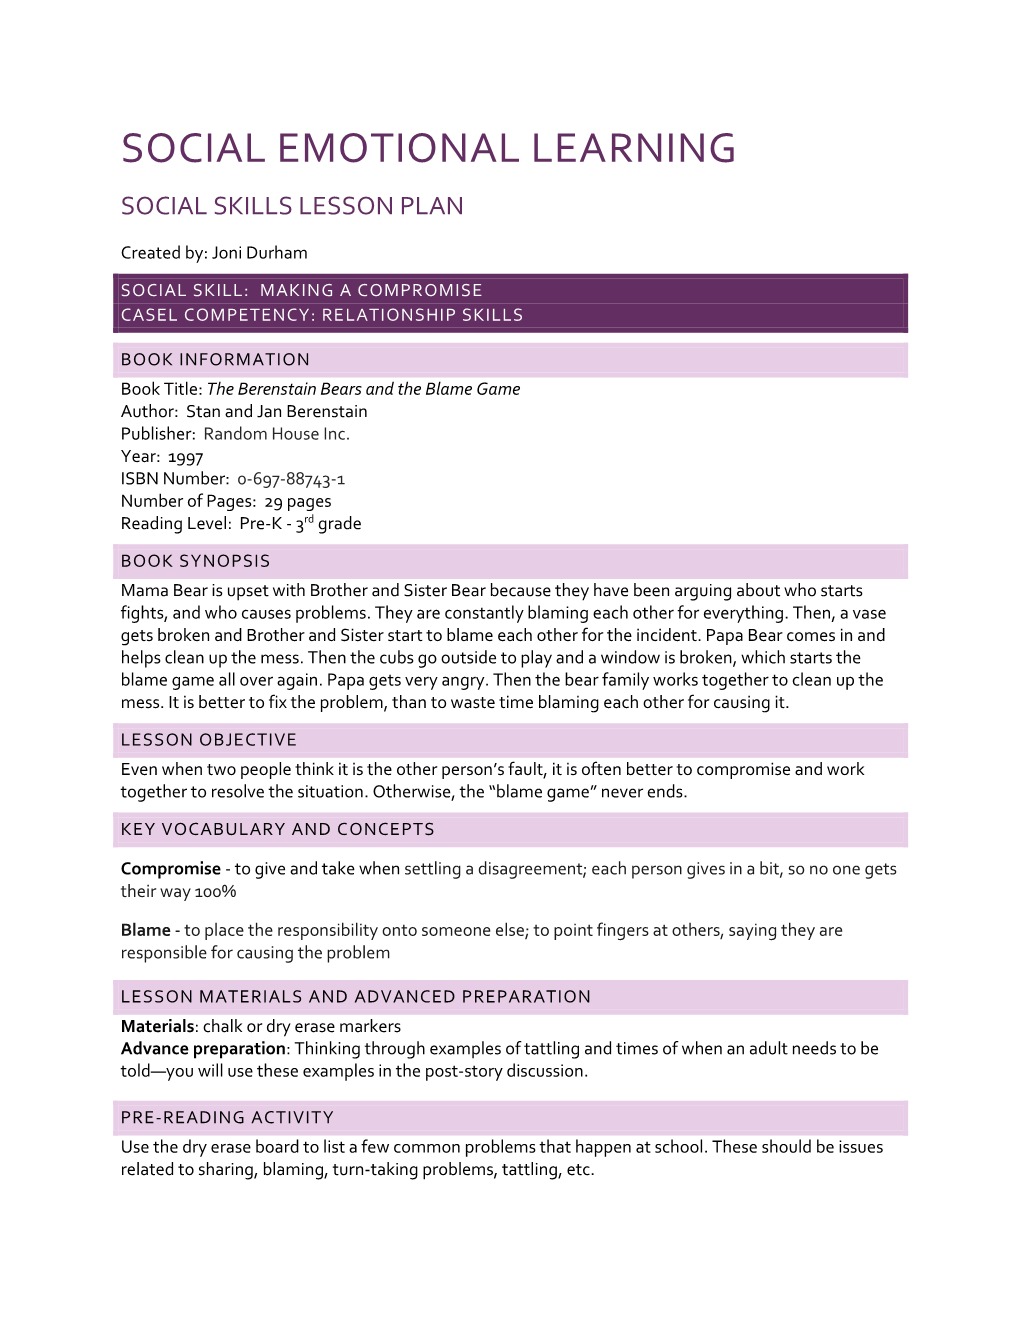 Social Emotional Learning Social Skills Lesson Plan